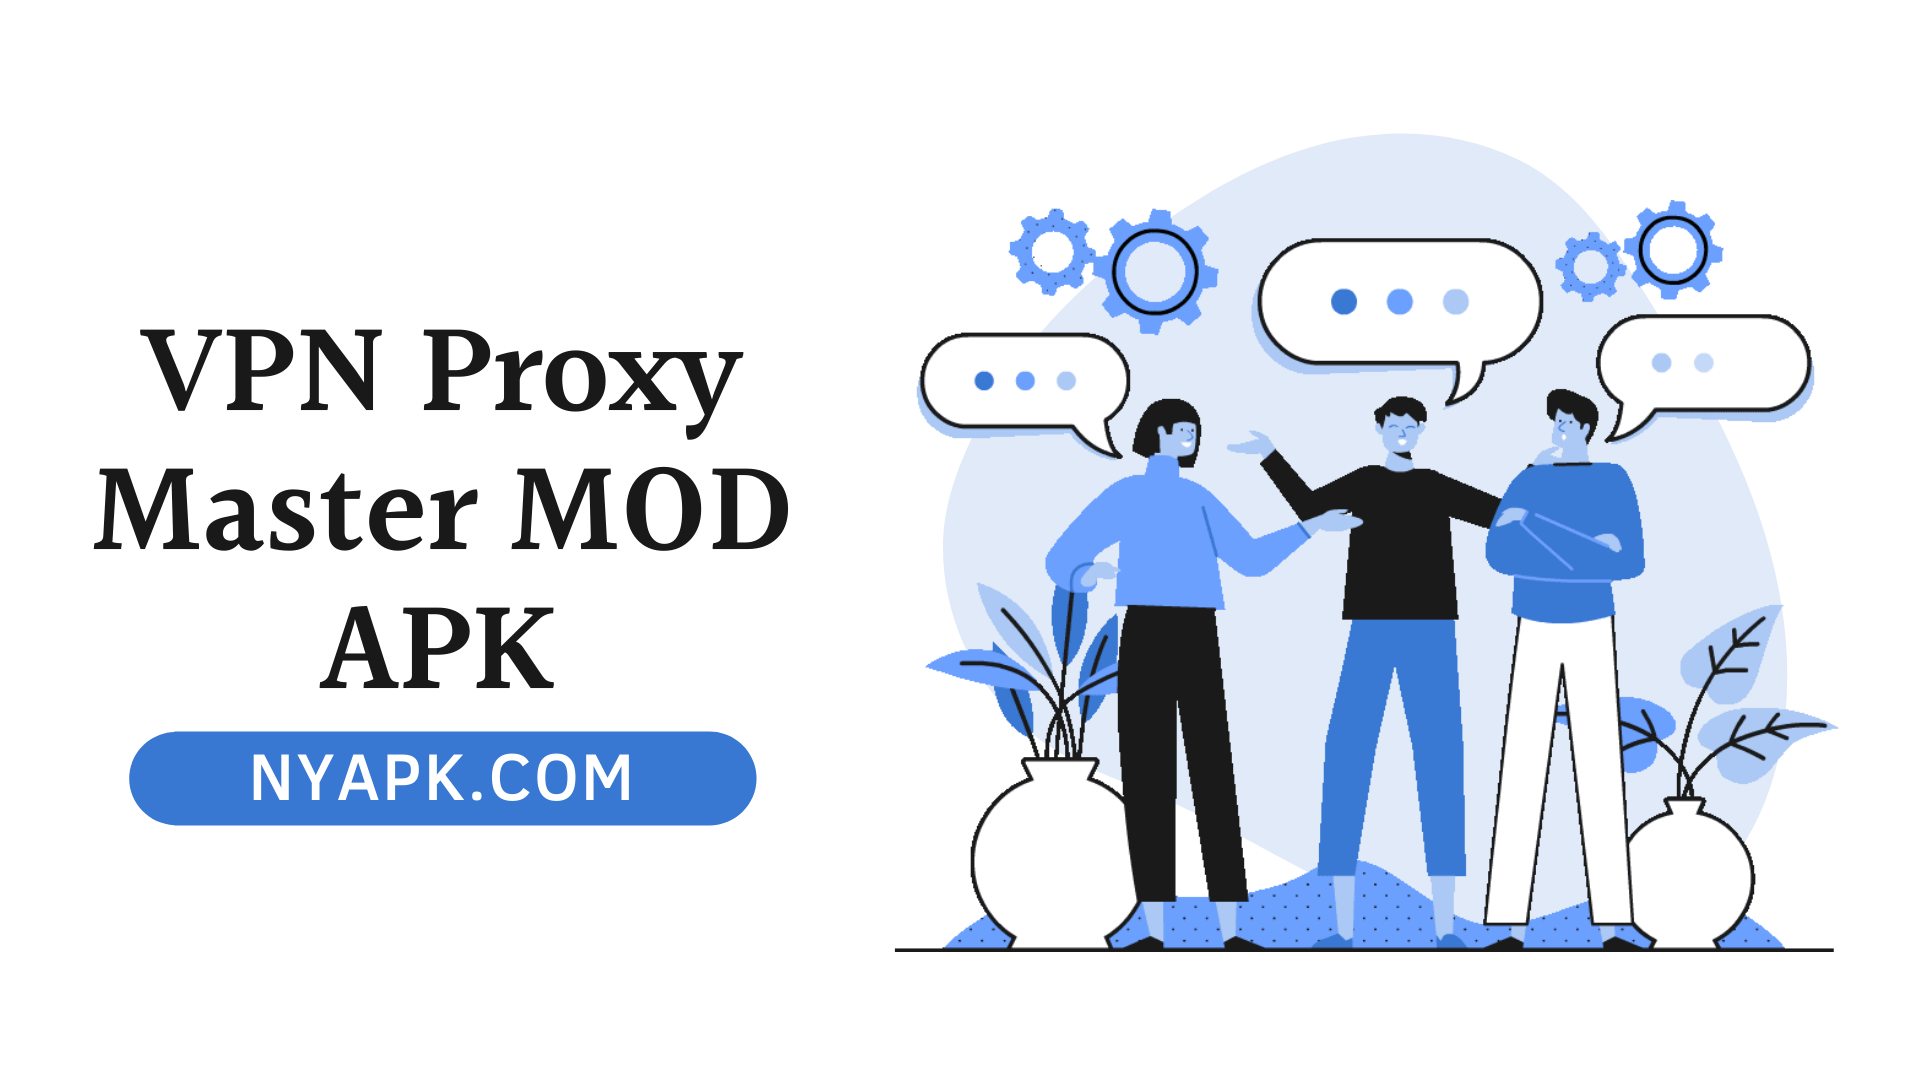 VPN Proxy Master MOD APK